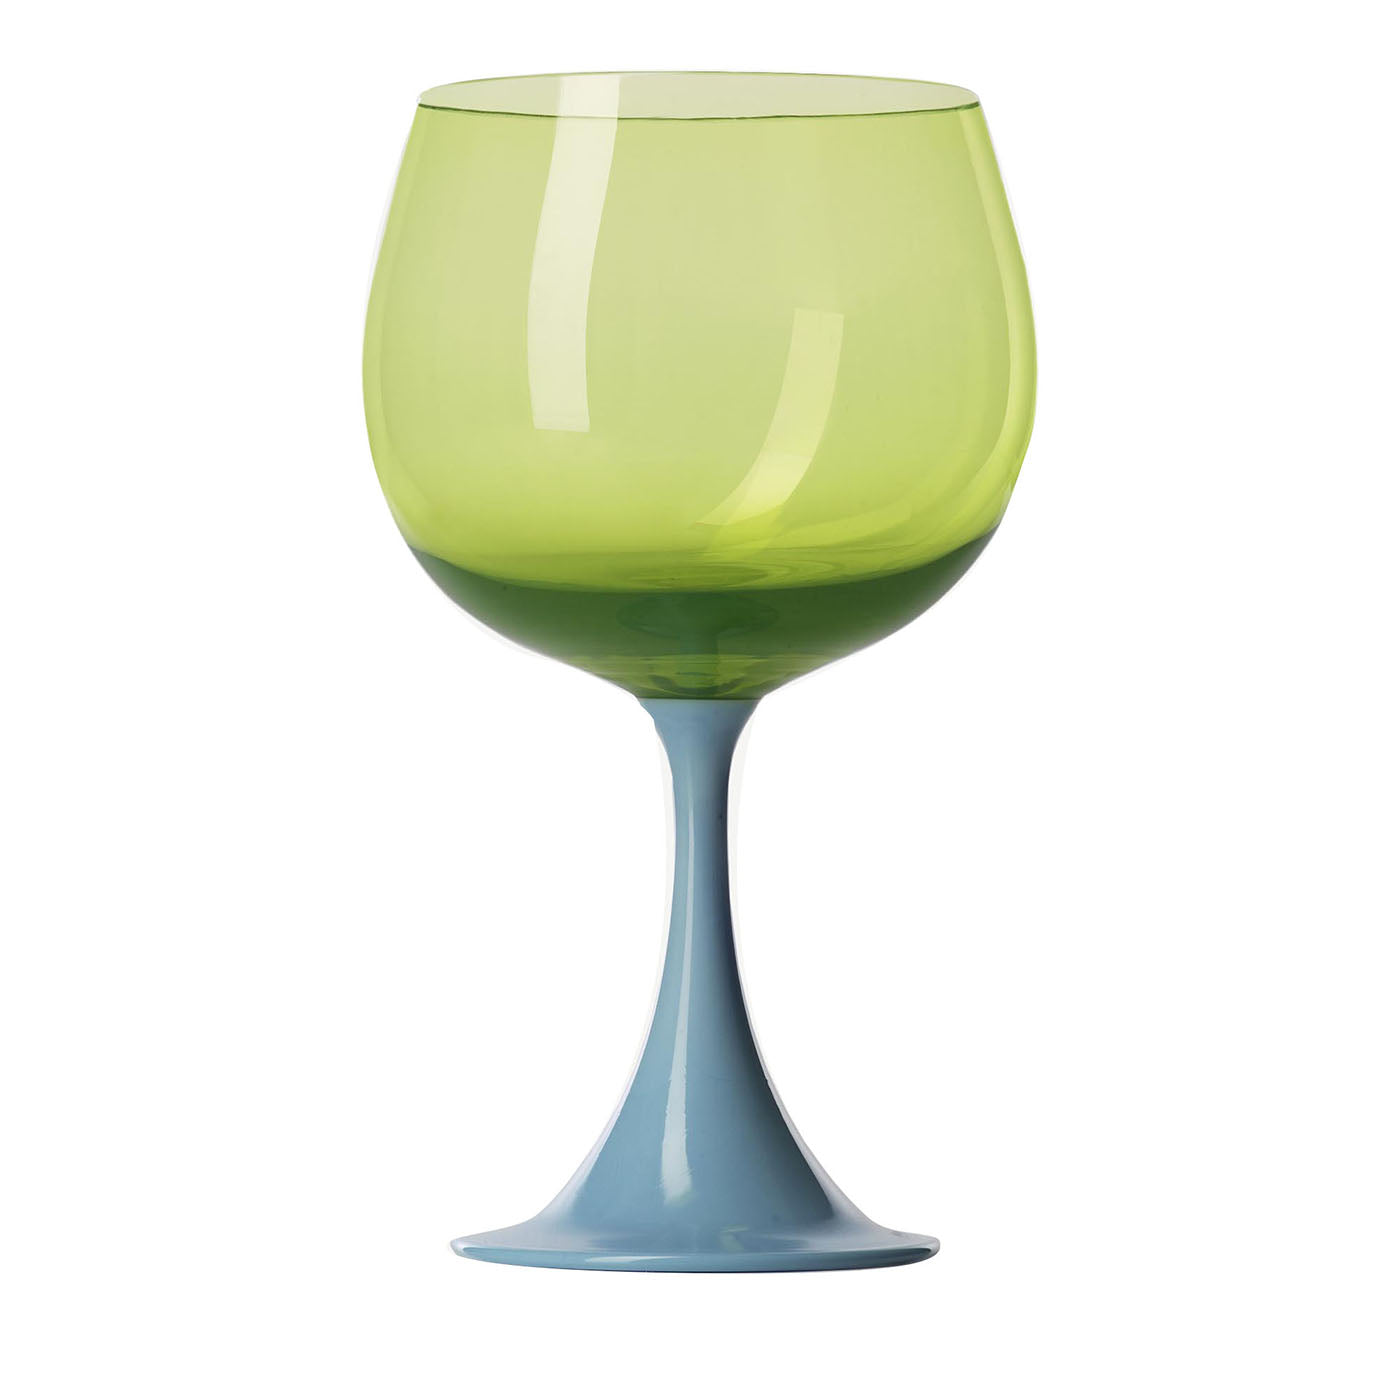 Burlesque Acid-Green & Light-Blue Stem Glass by Stefano Marcato - Main view